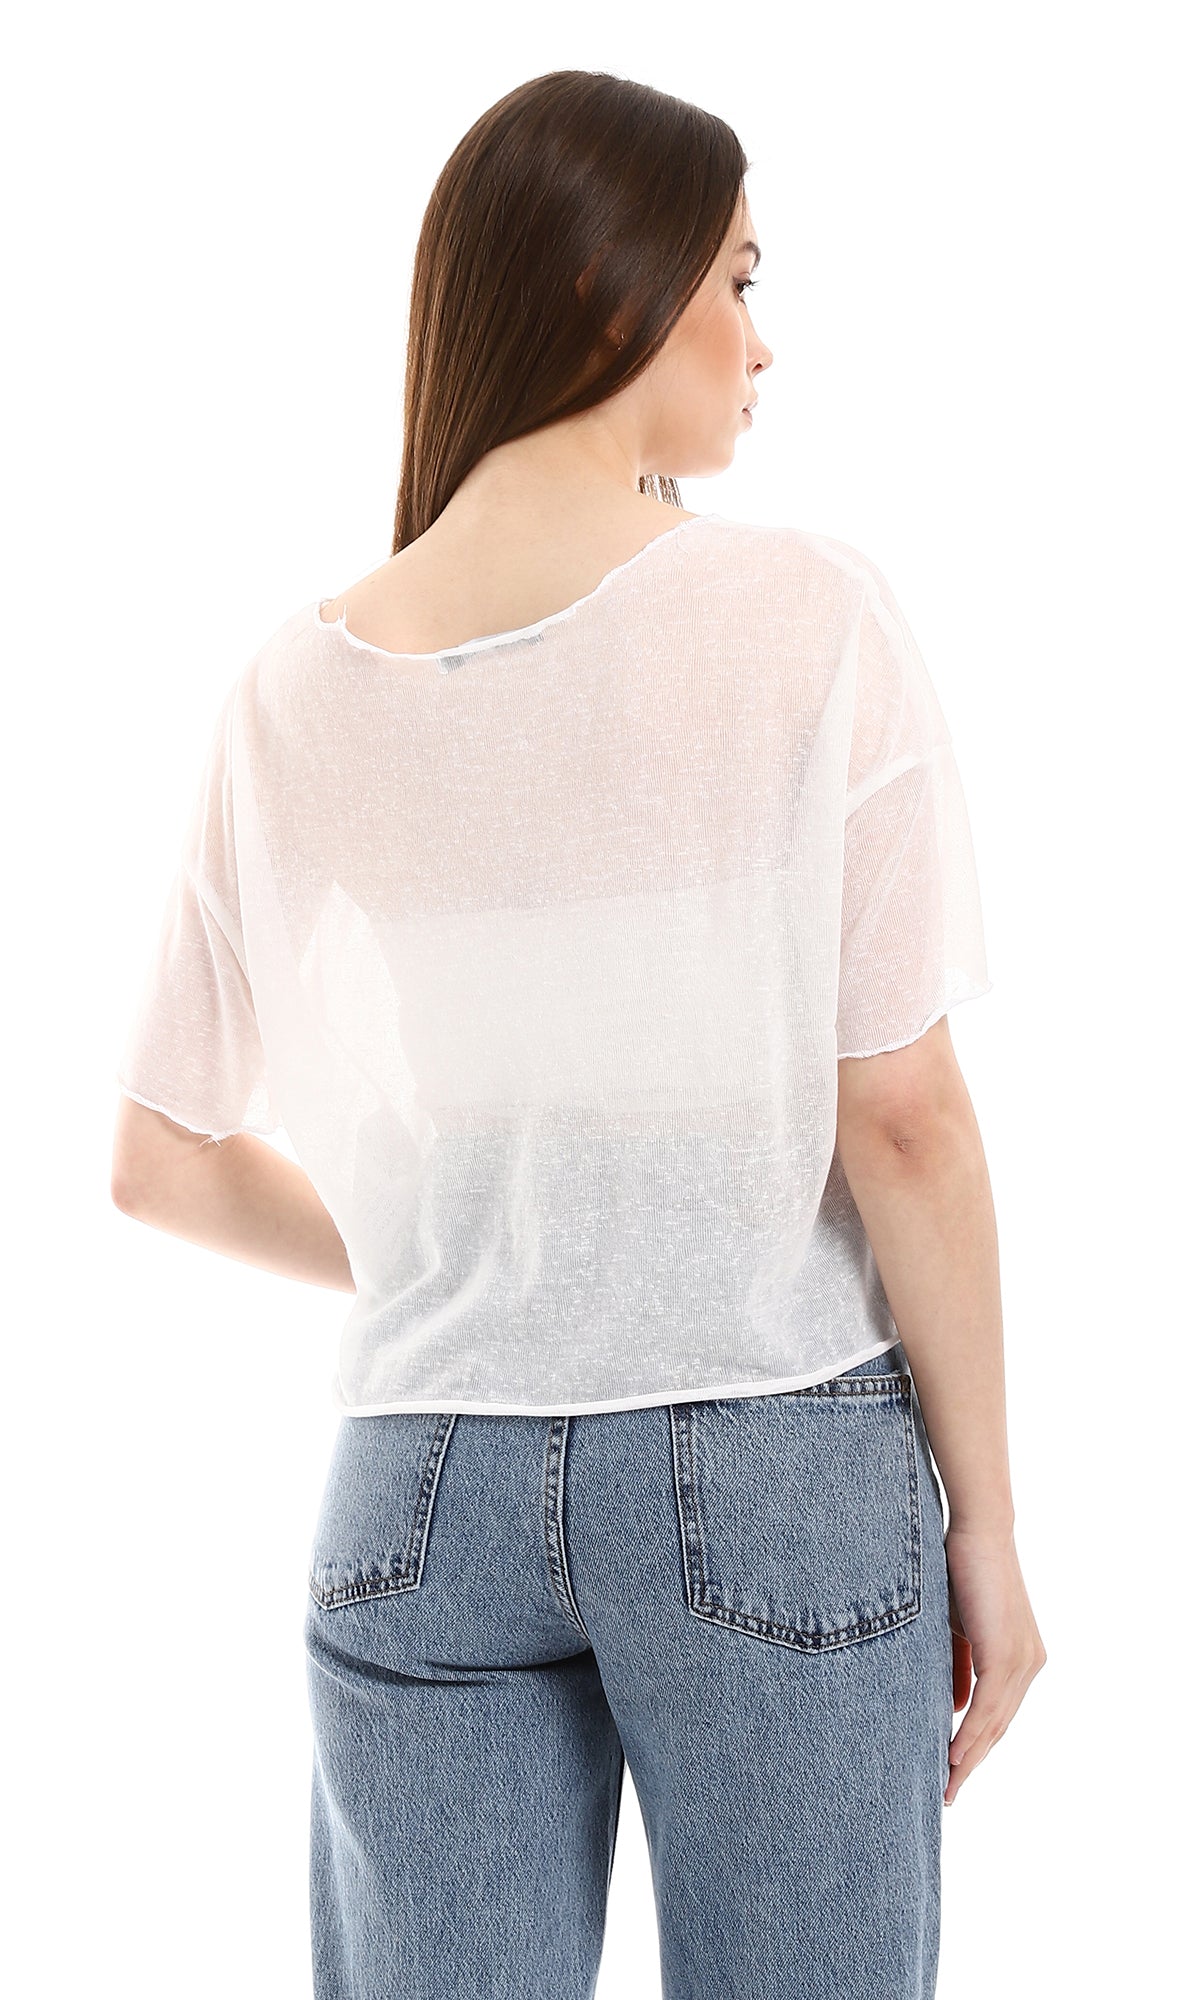 O166325 Soft Fabric Slip On Short Sleeves Top - White